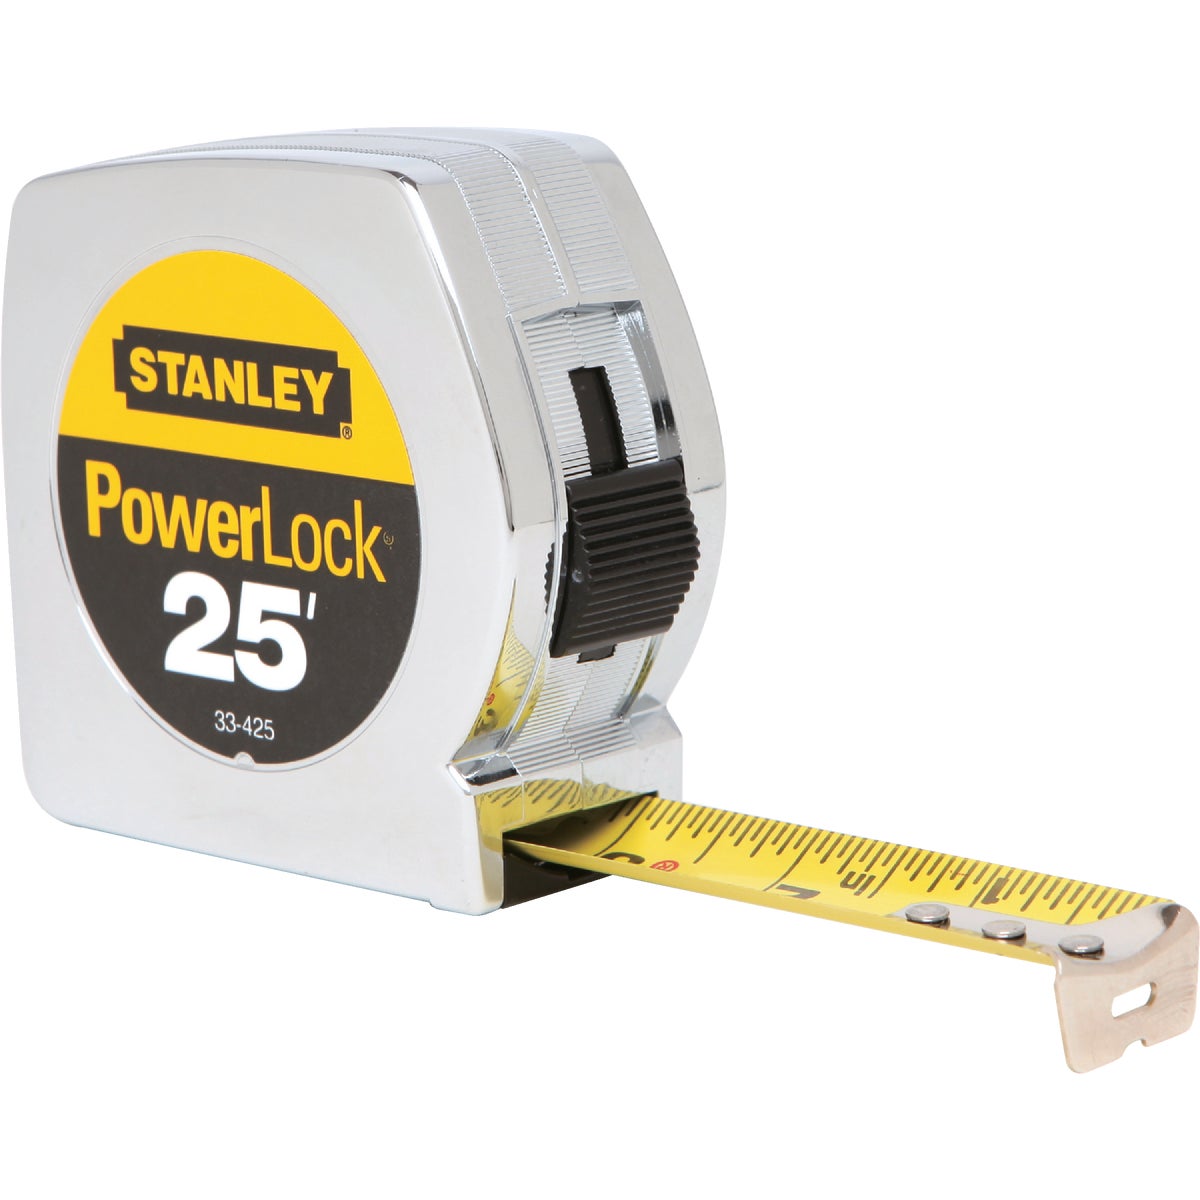 Stanley PowerLock 25 Ft. Tape Measure